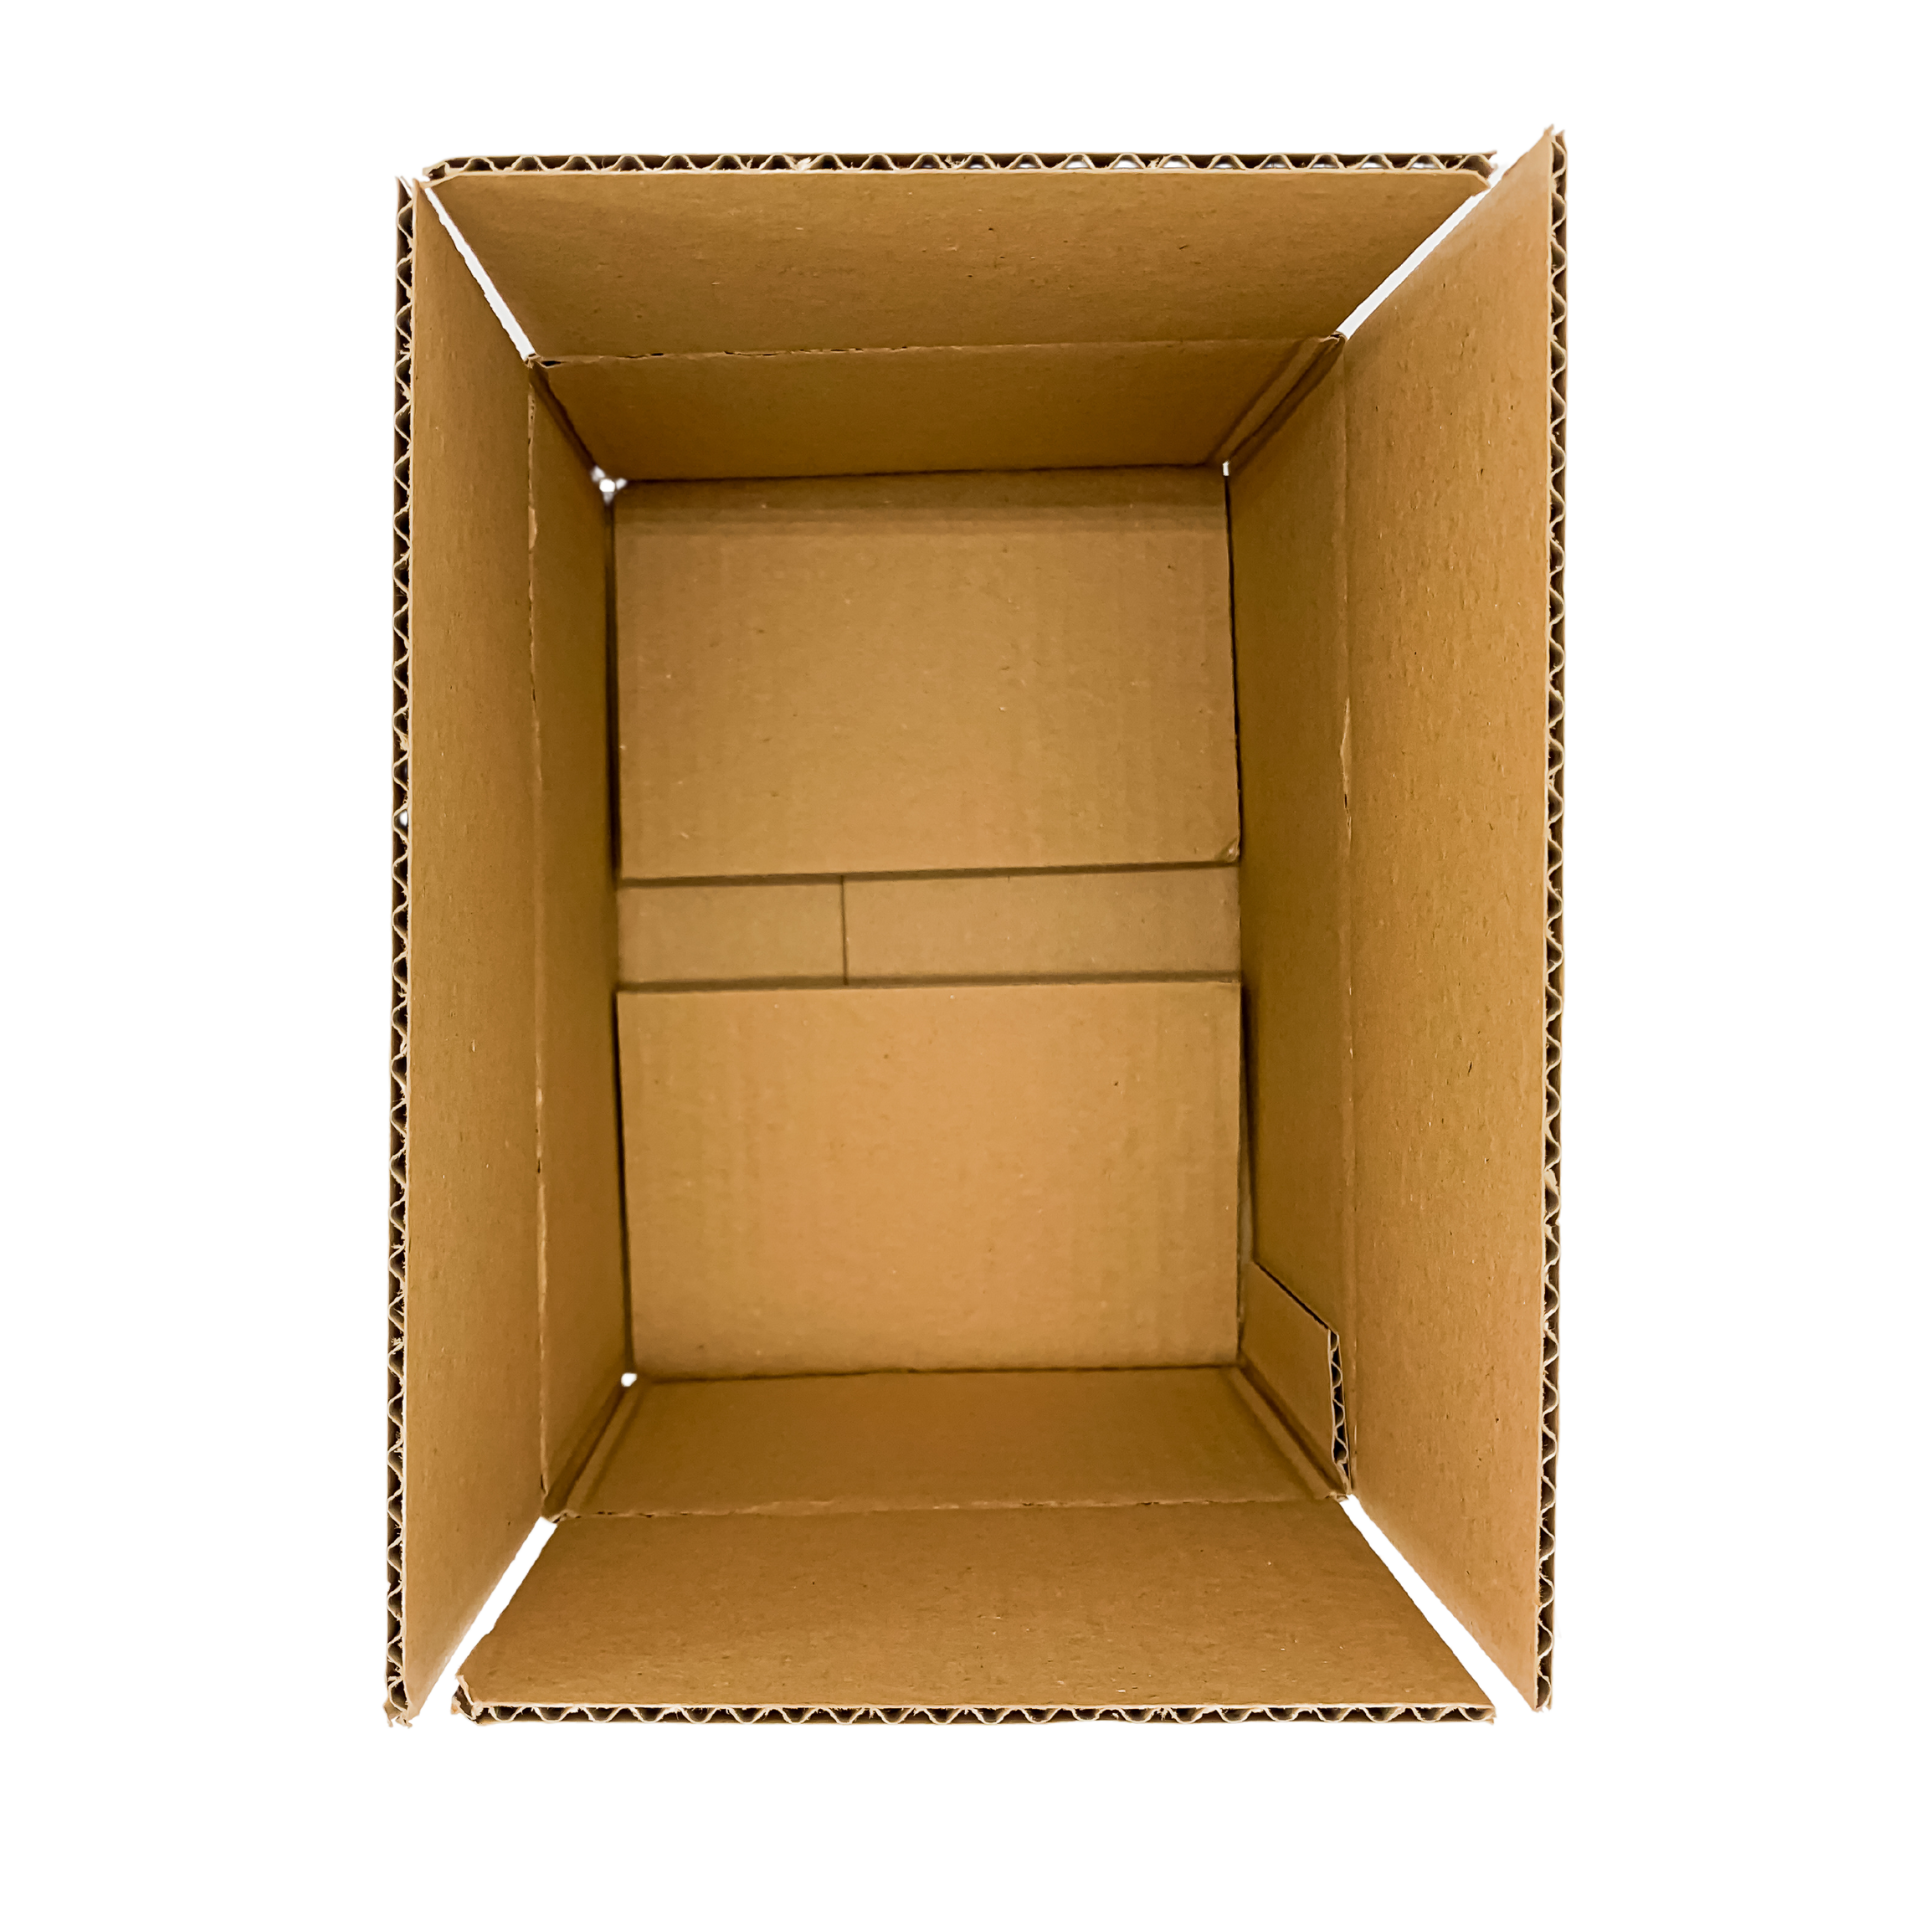 Pudełko klapowe (215x150x107) - postPACK